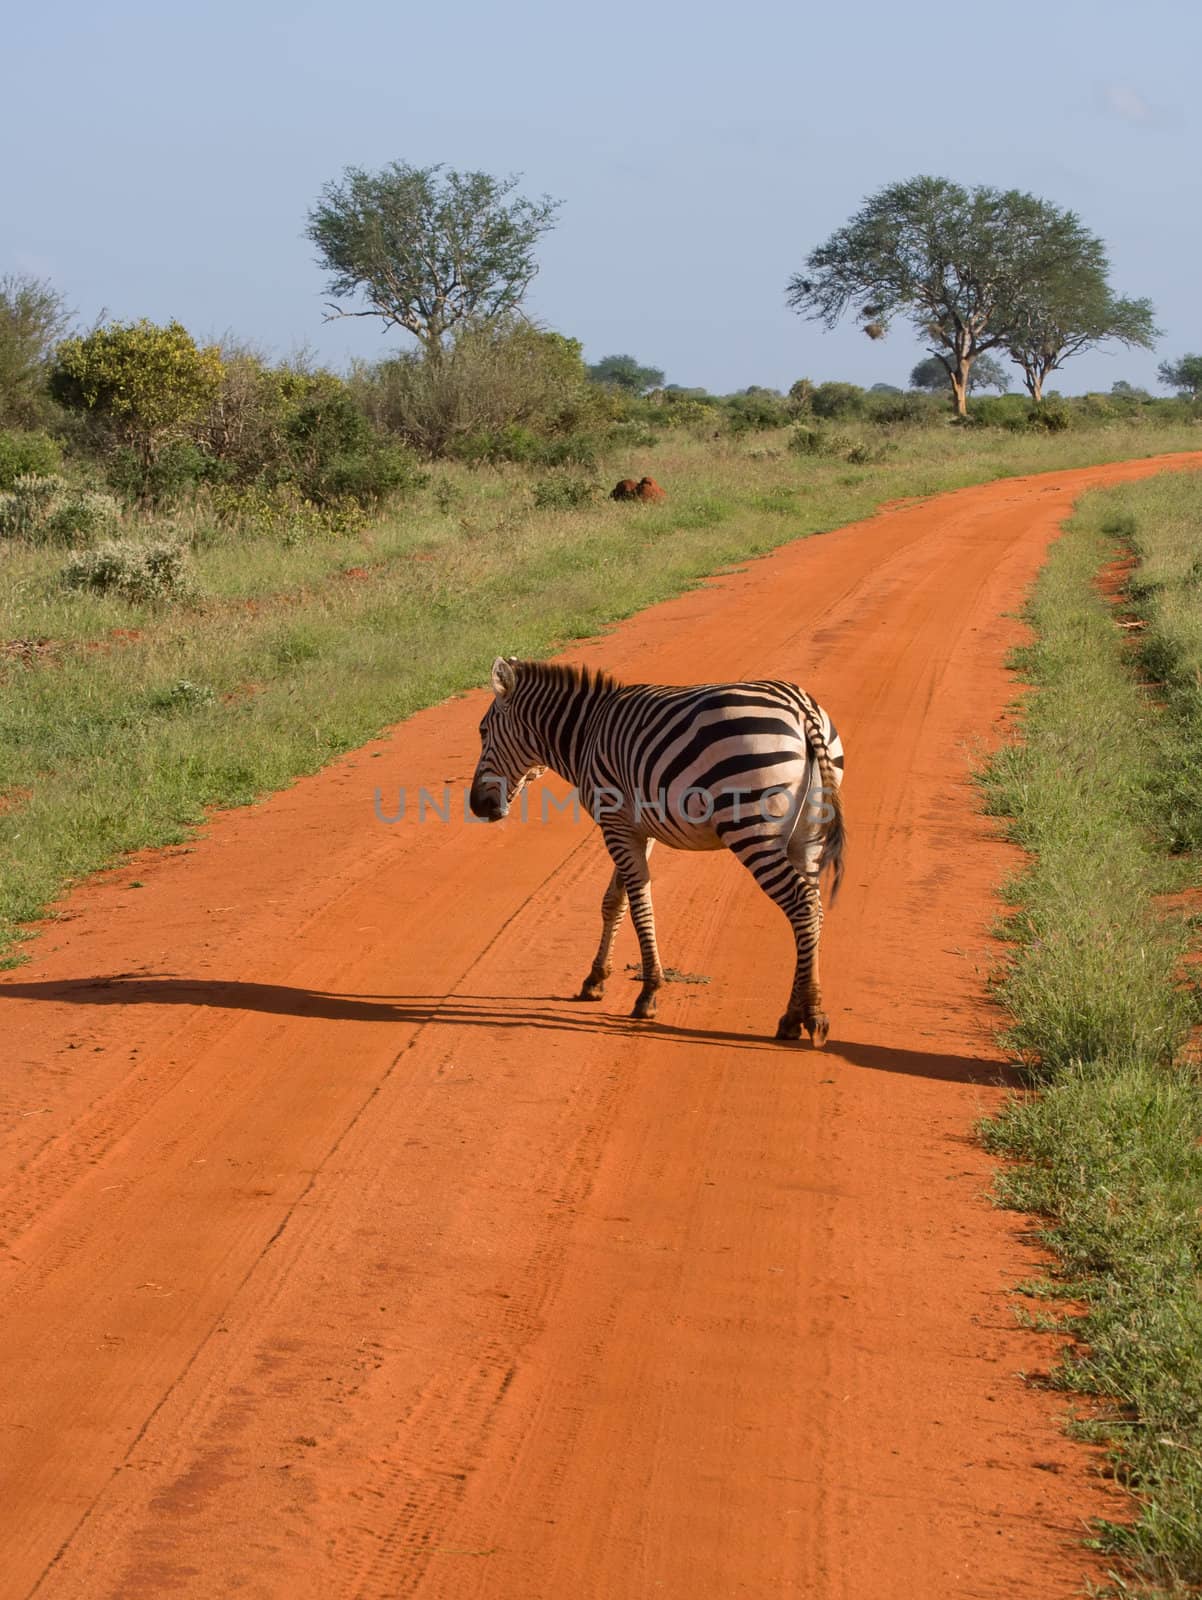 african Zebra